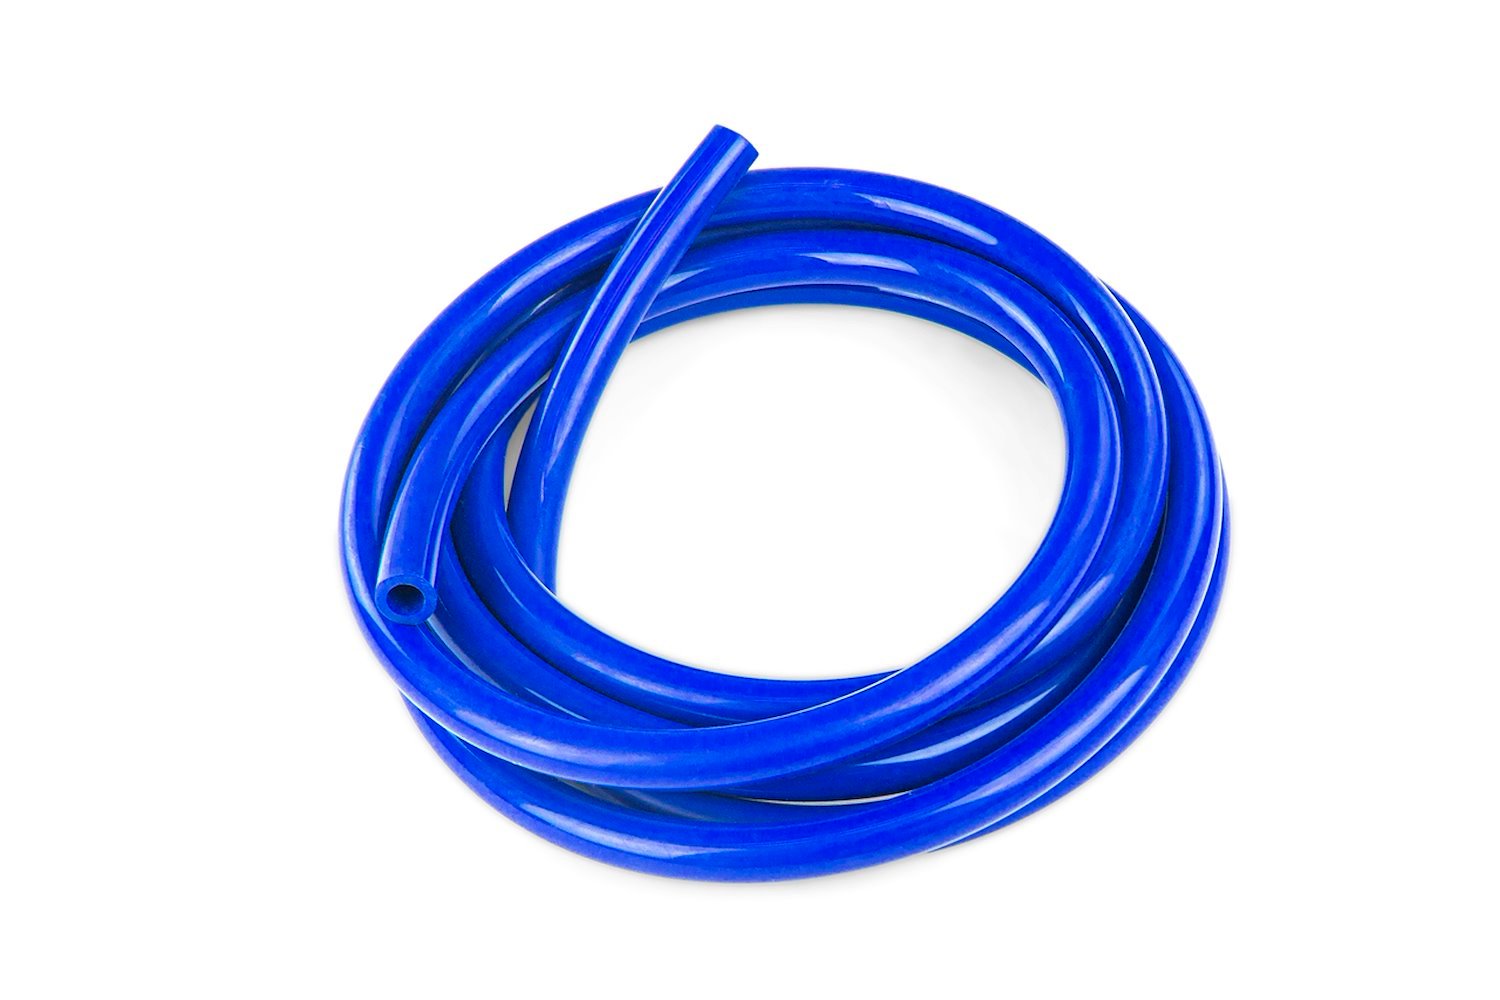 HTSVH3-BLUEx10 High-Temperature Silicone Vacuum Hose Tubing, 1/8 in. ID, 10 ft. Roll, Blue